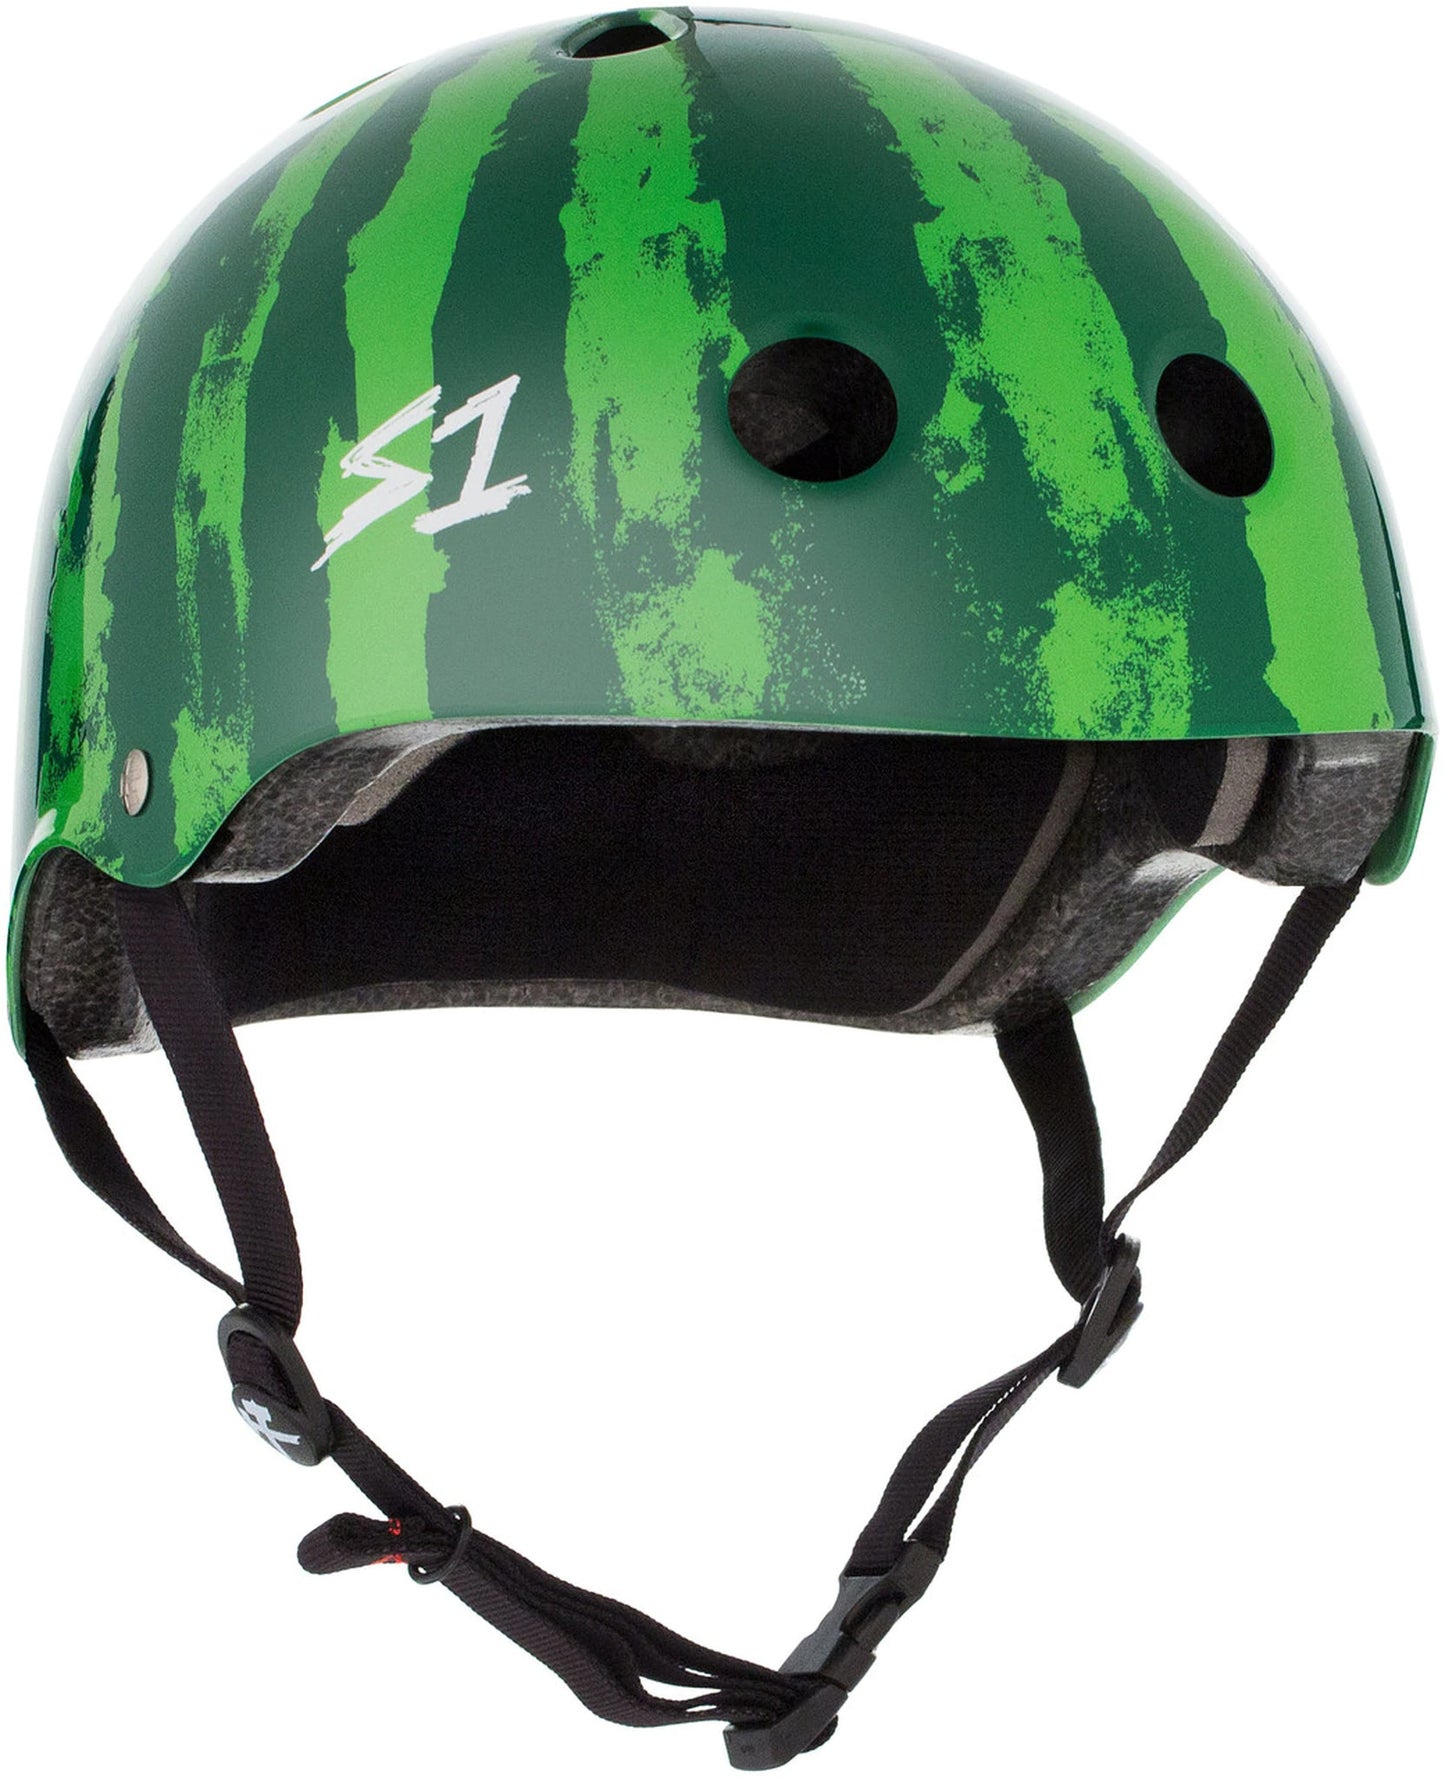 S One Lifer Helmet Skate - Watermelon